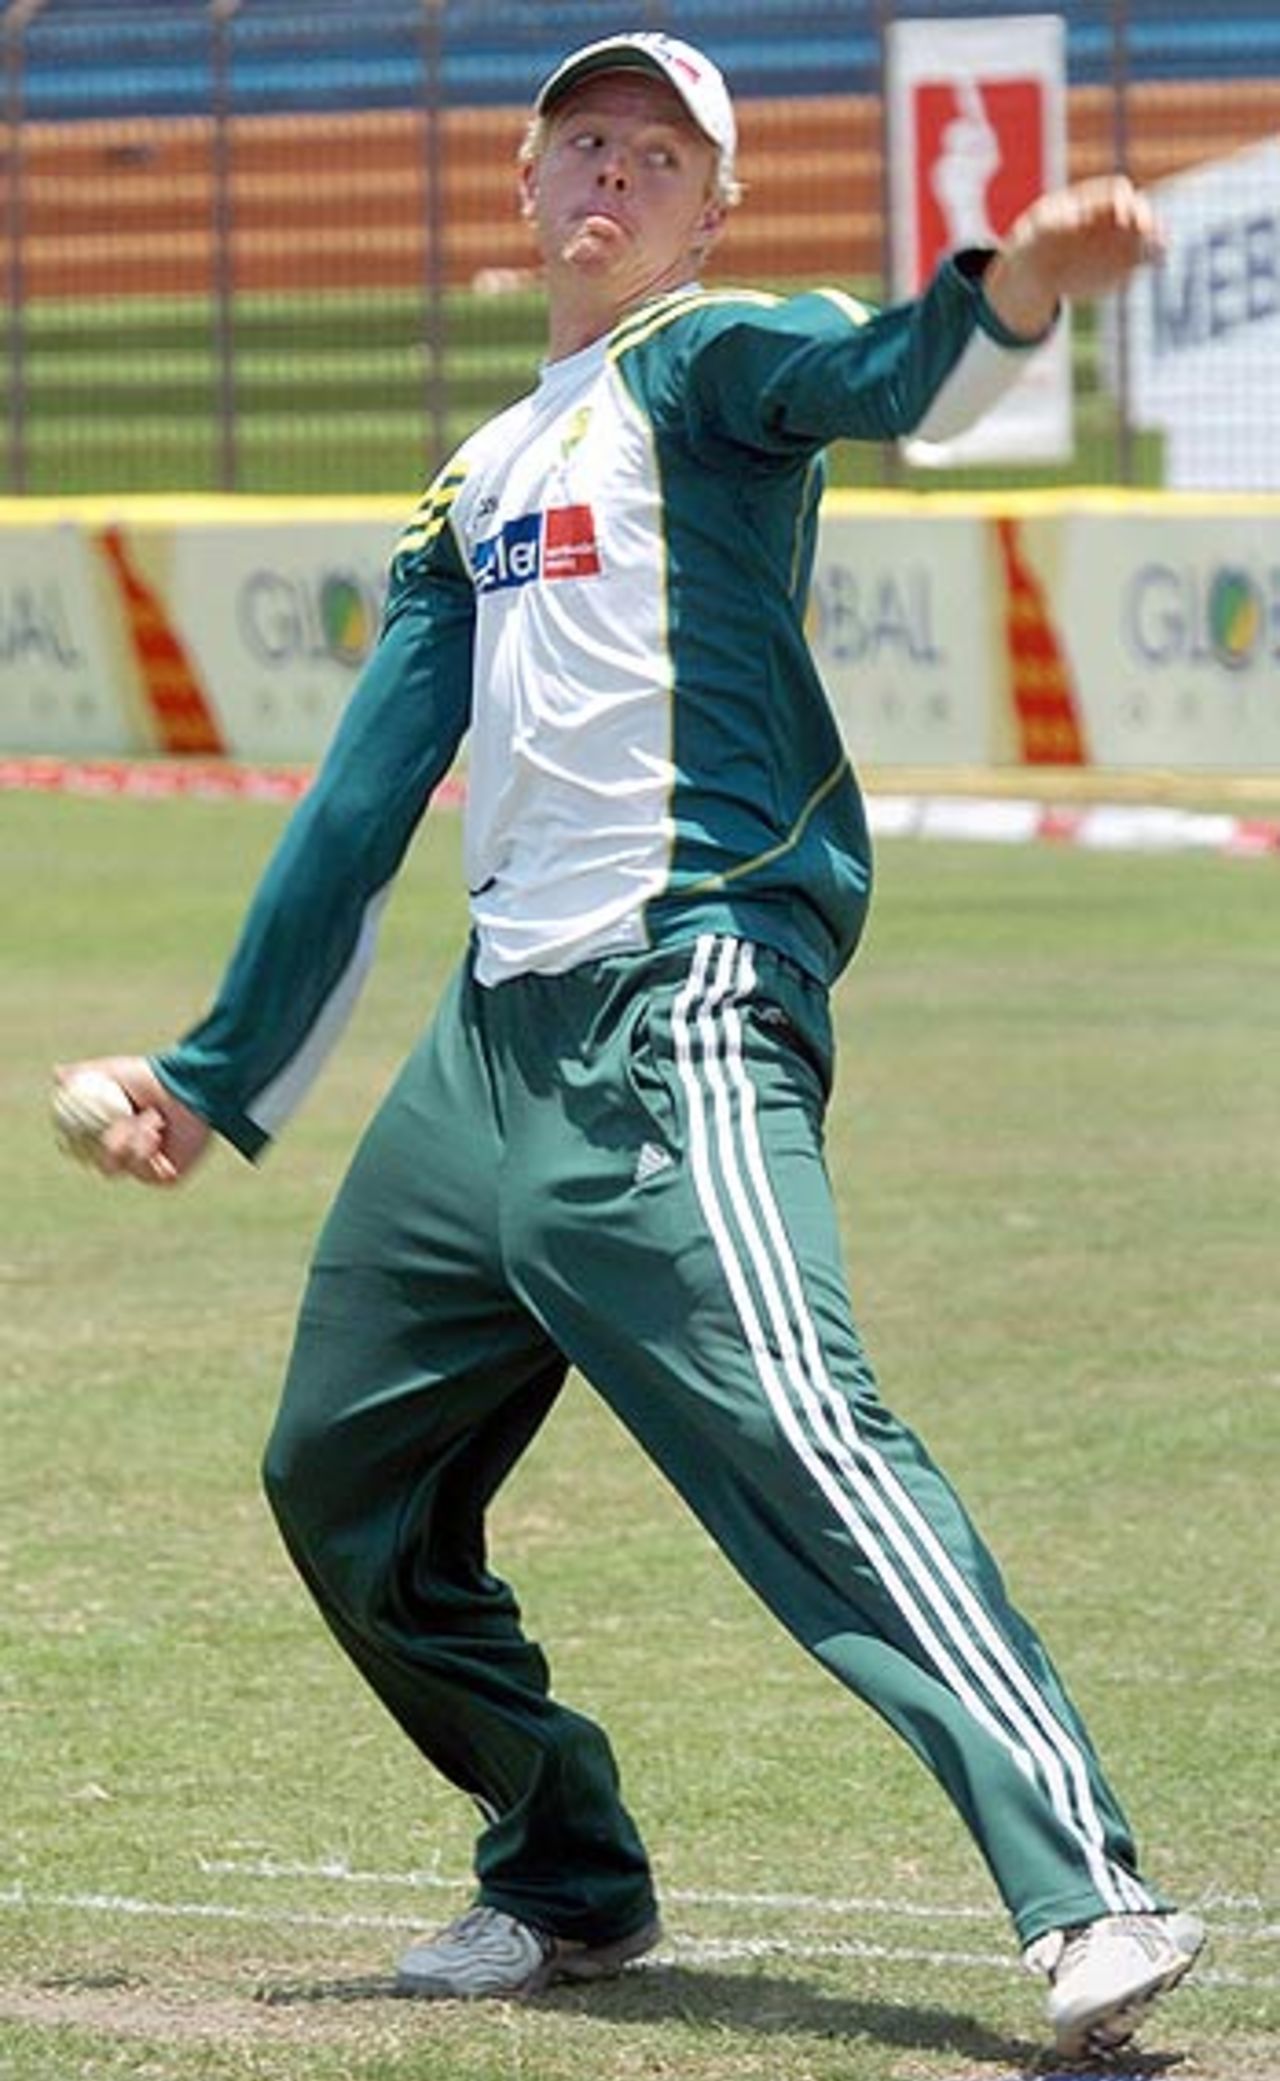 Dan Cullen bowls at the nets, Chittagong, 21 April 2006